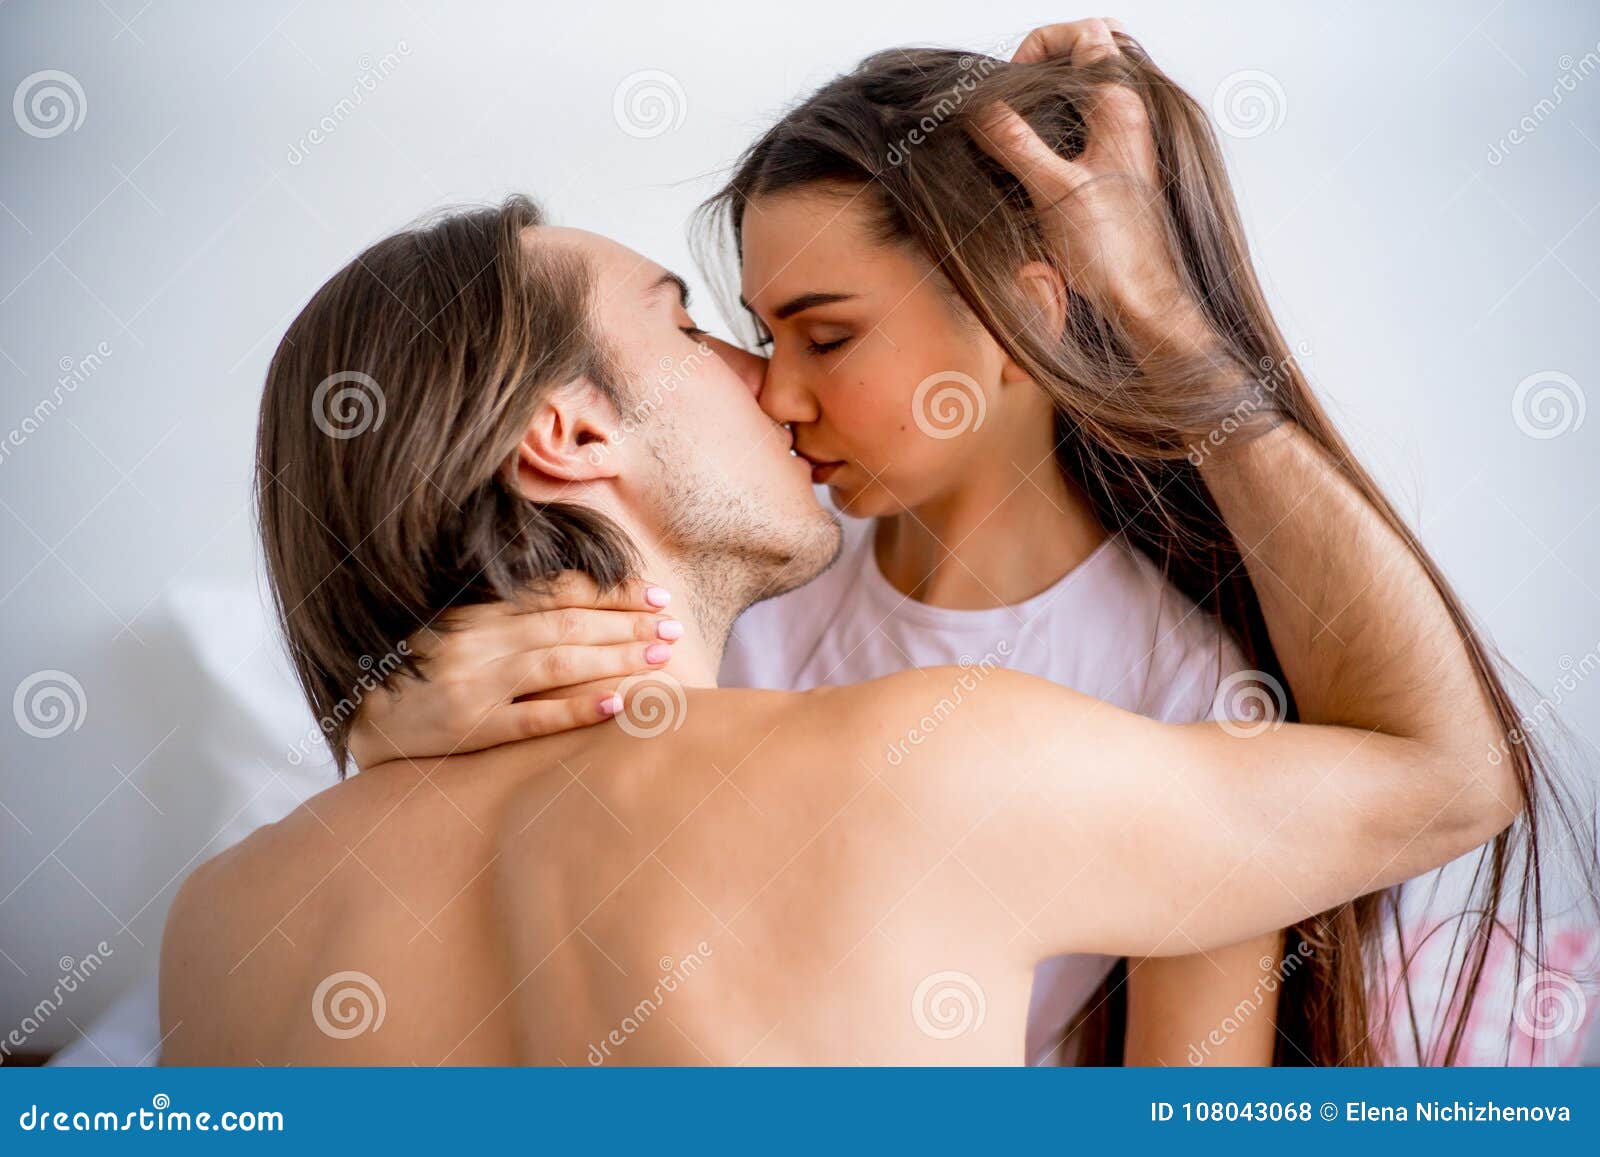 Couple having sex stock photo photo photo